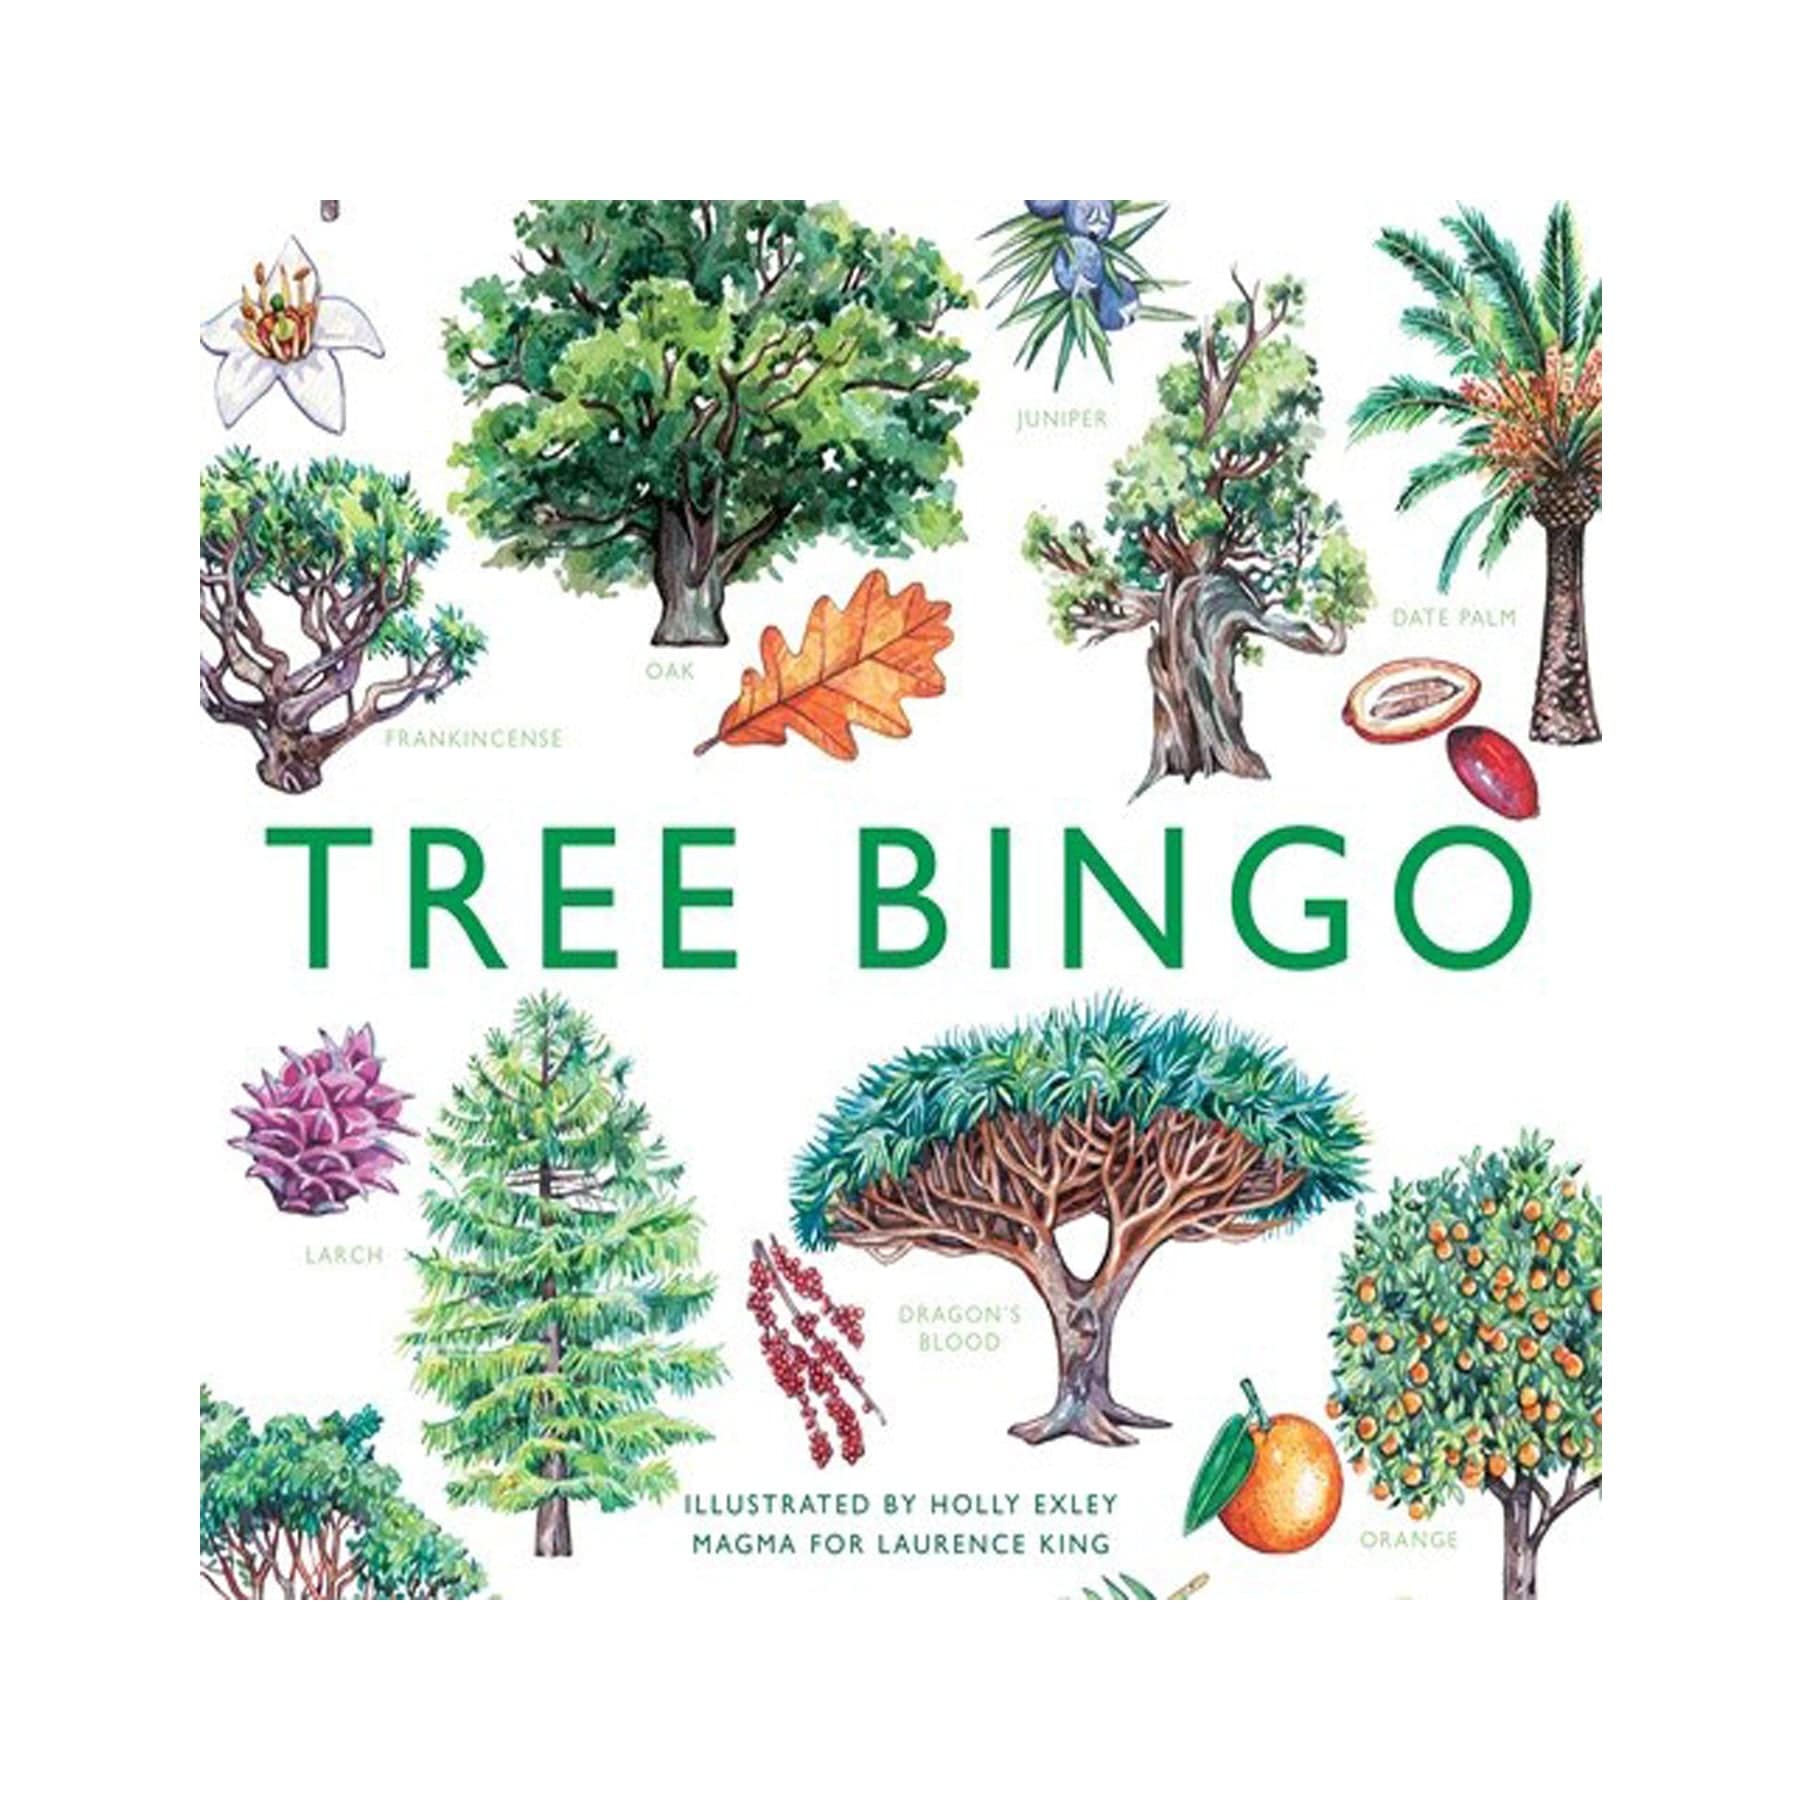 Tree bingo